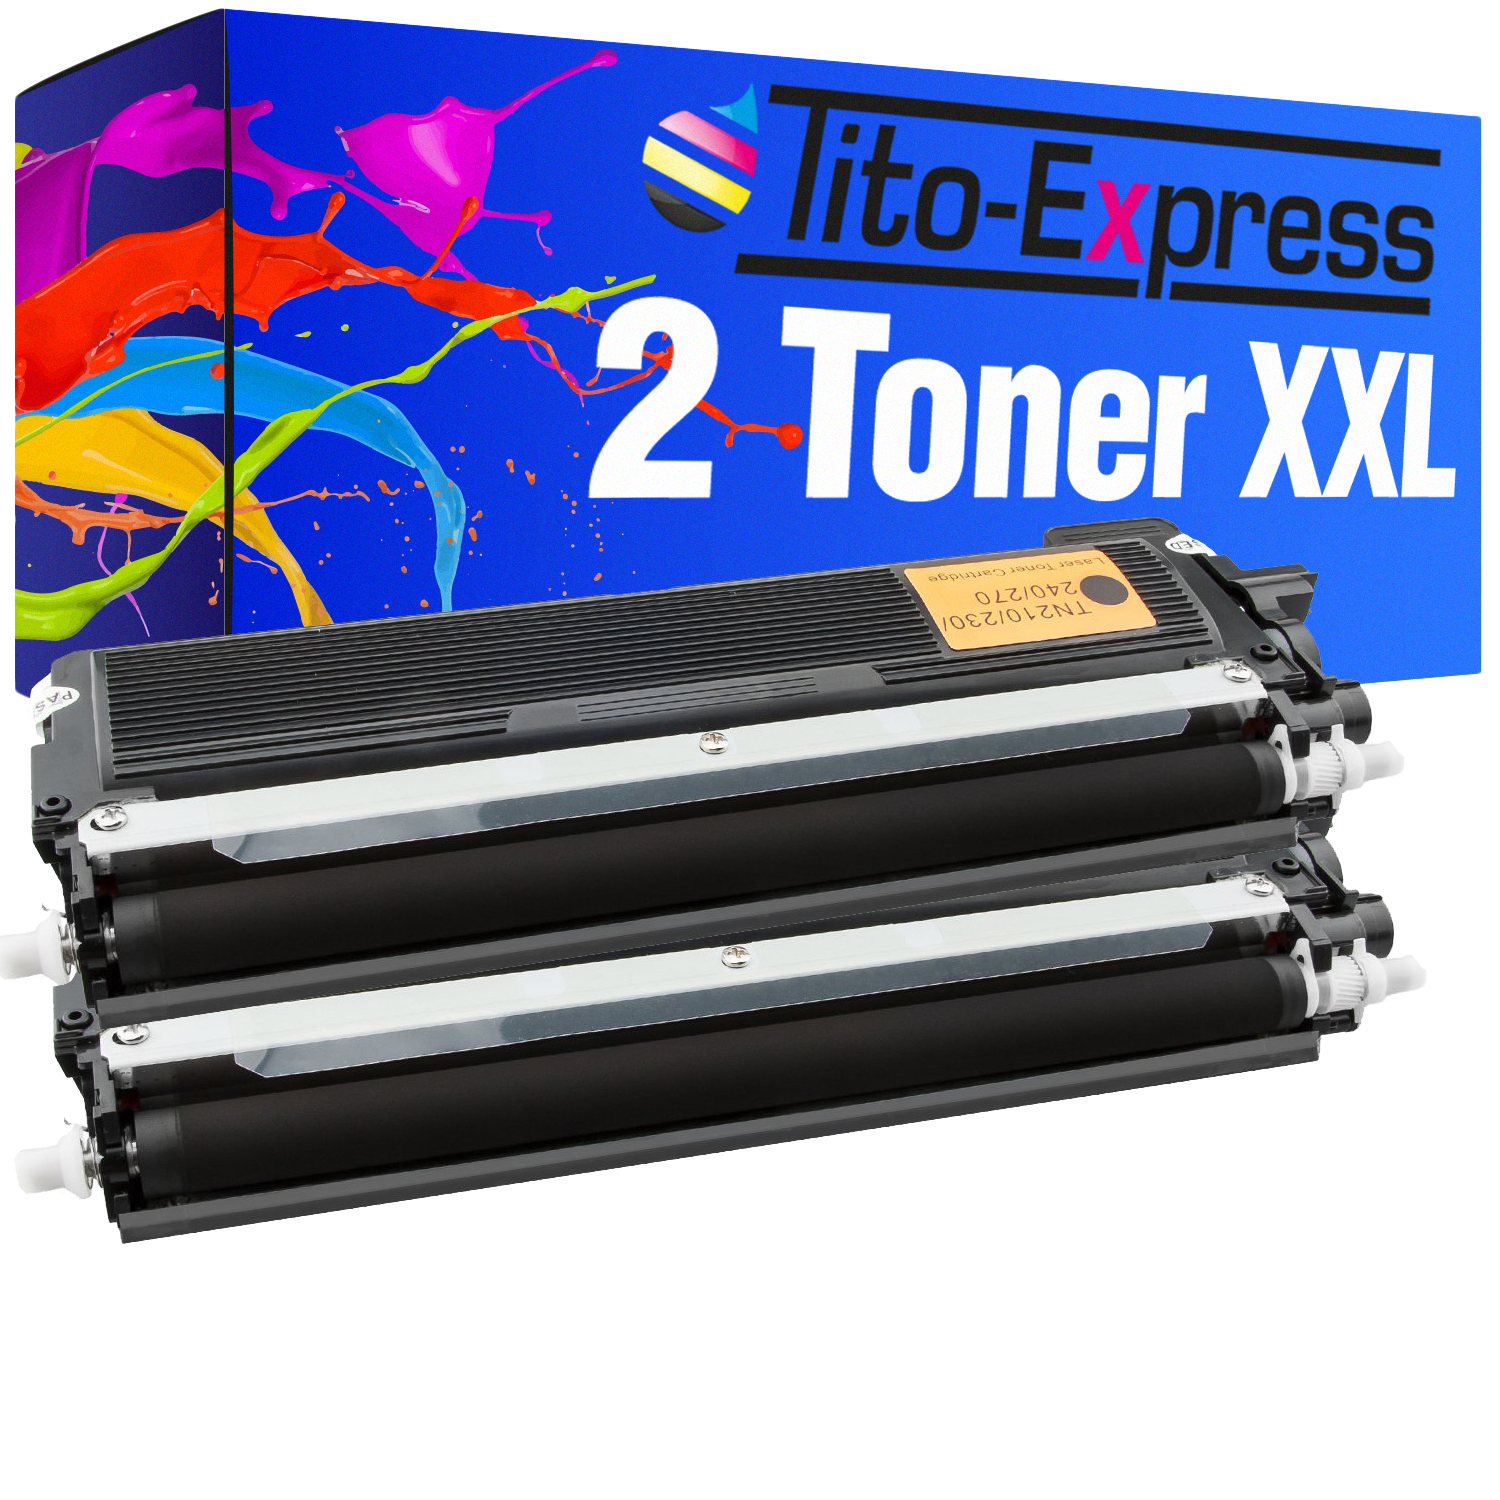 TITO-EXPRESS PLATINUMSERIE 2 Toner TN-230 ersetzt black Brother (TN230) Toner